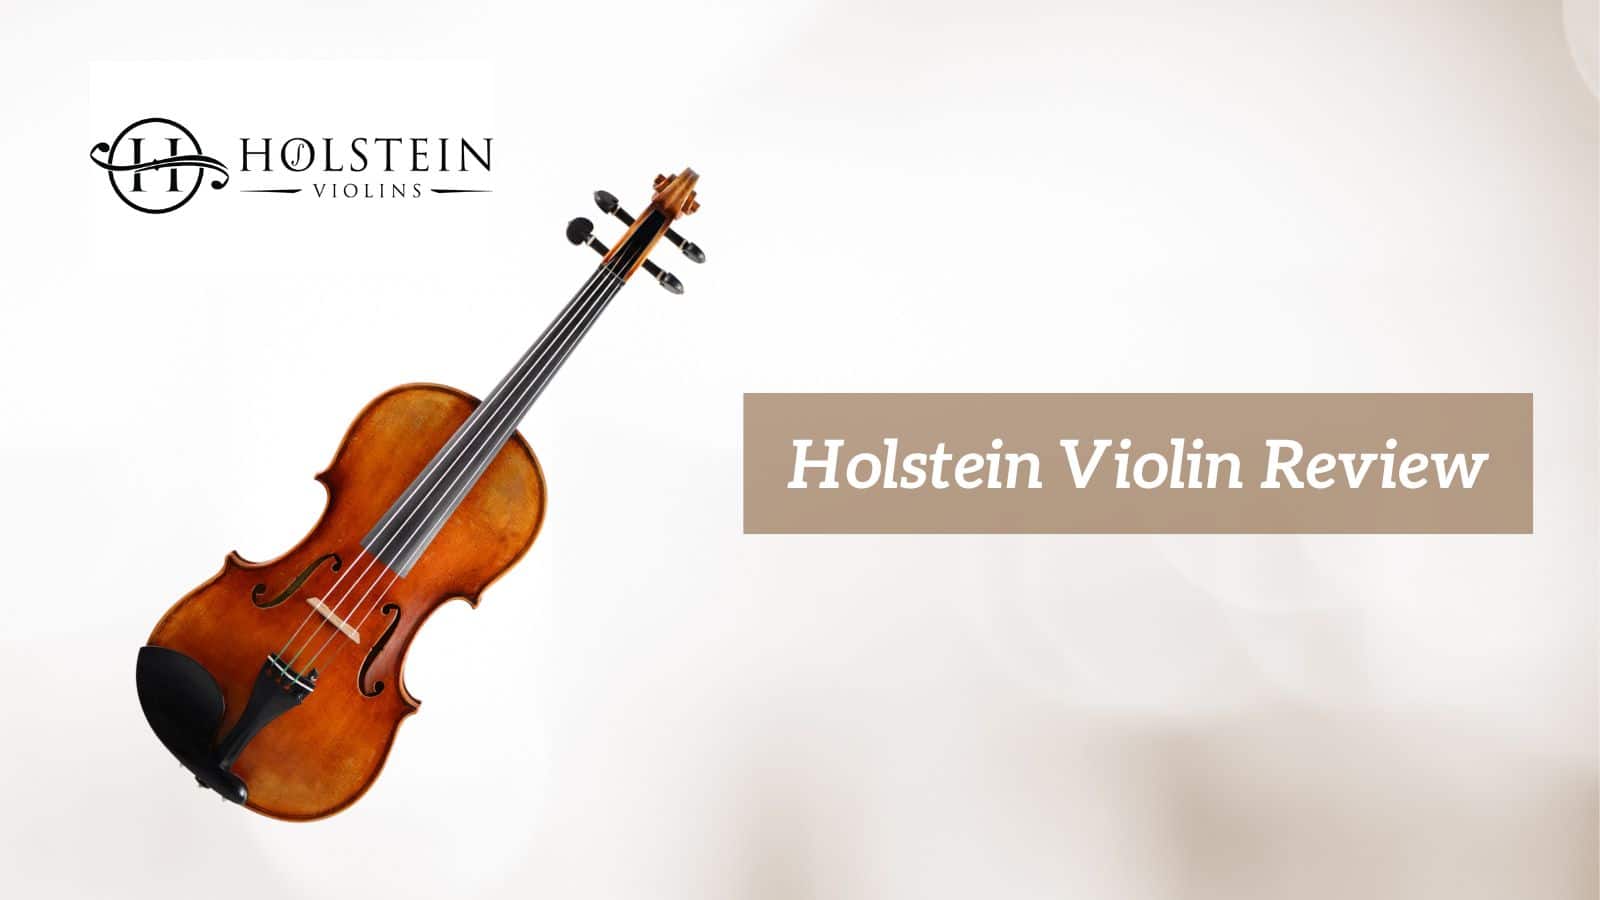 Holstein Violin Review